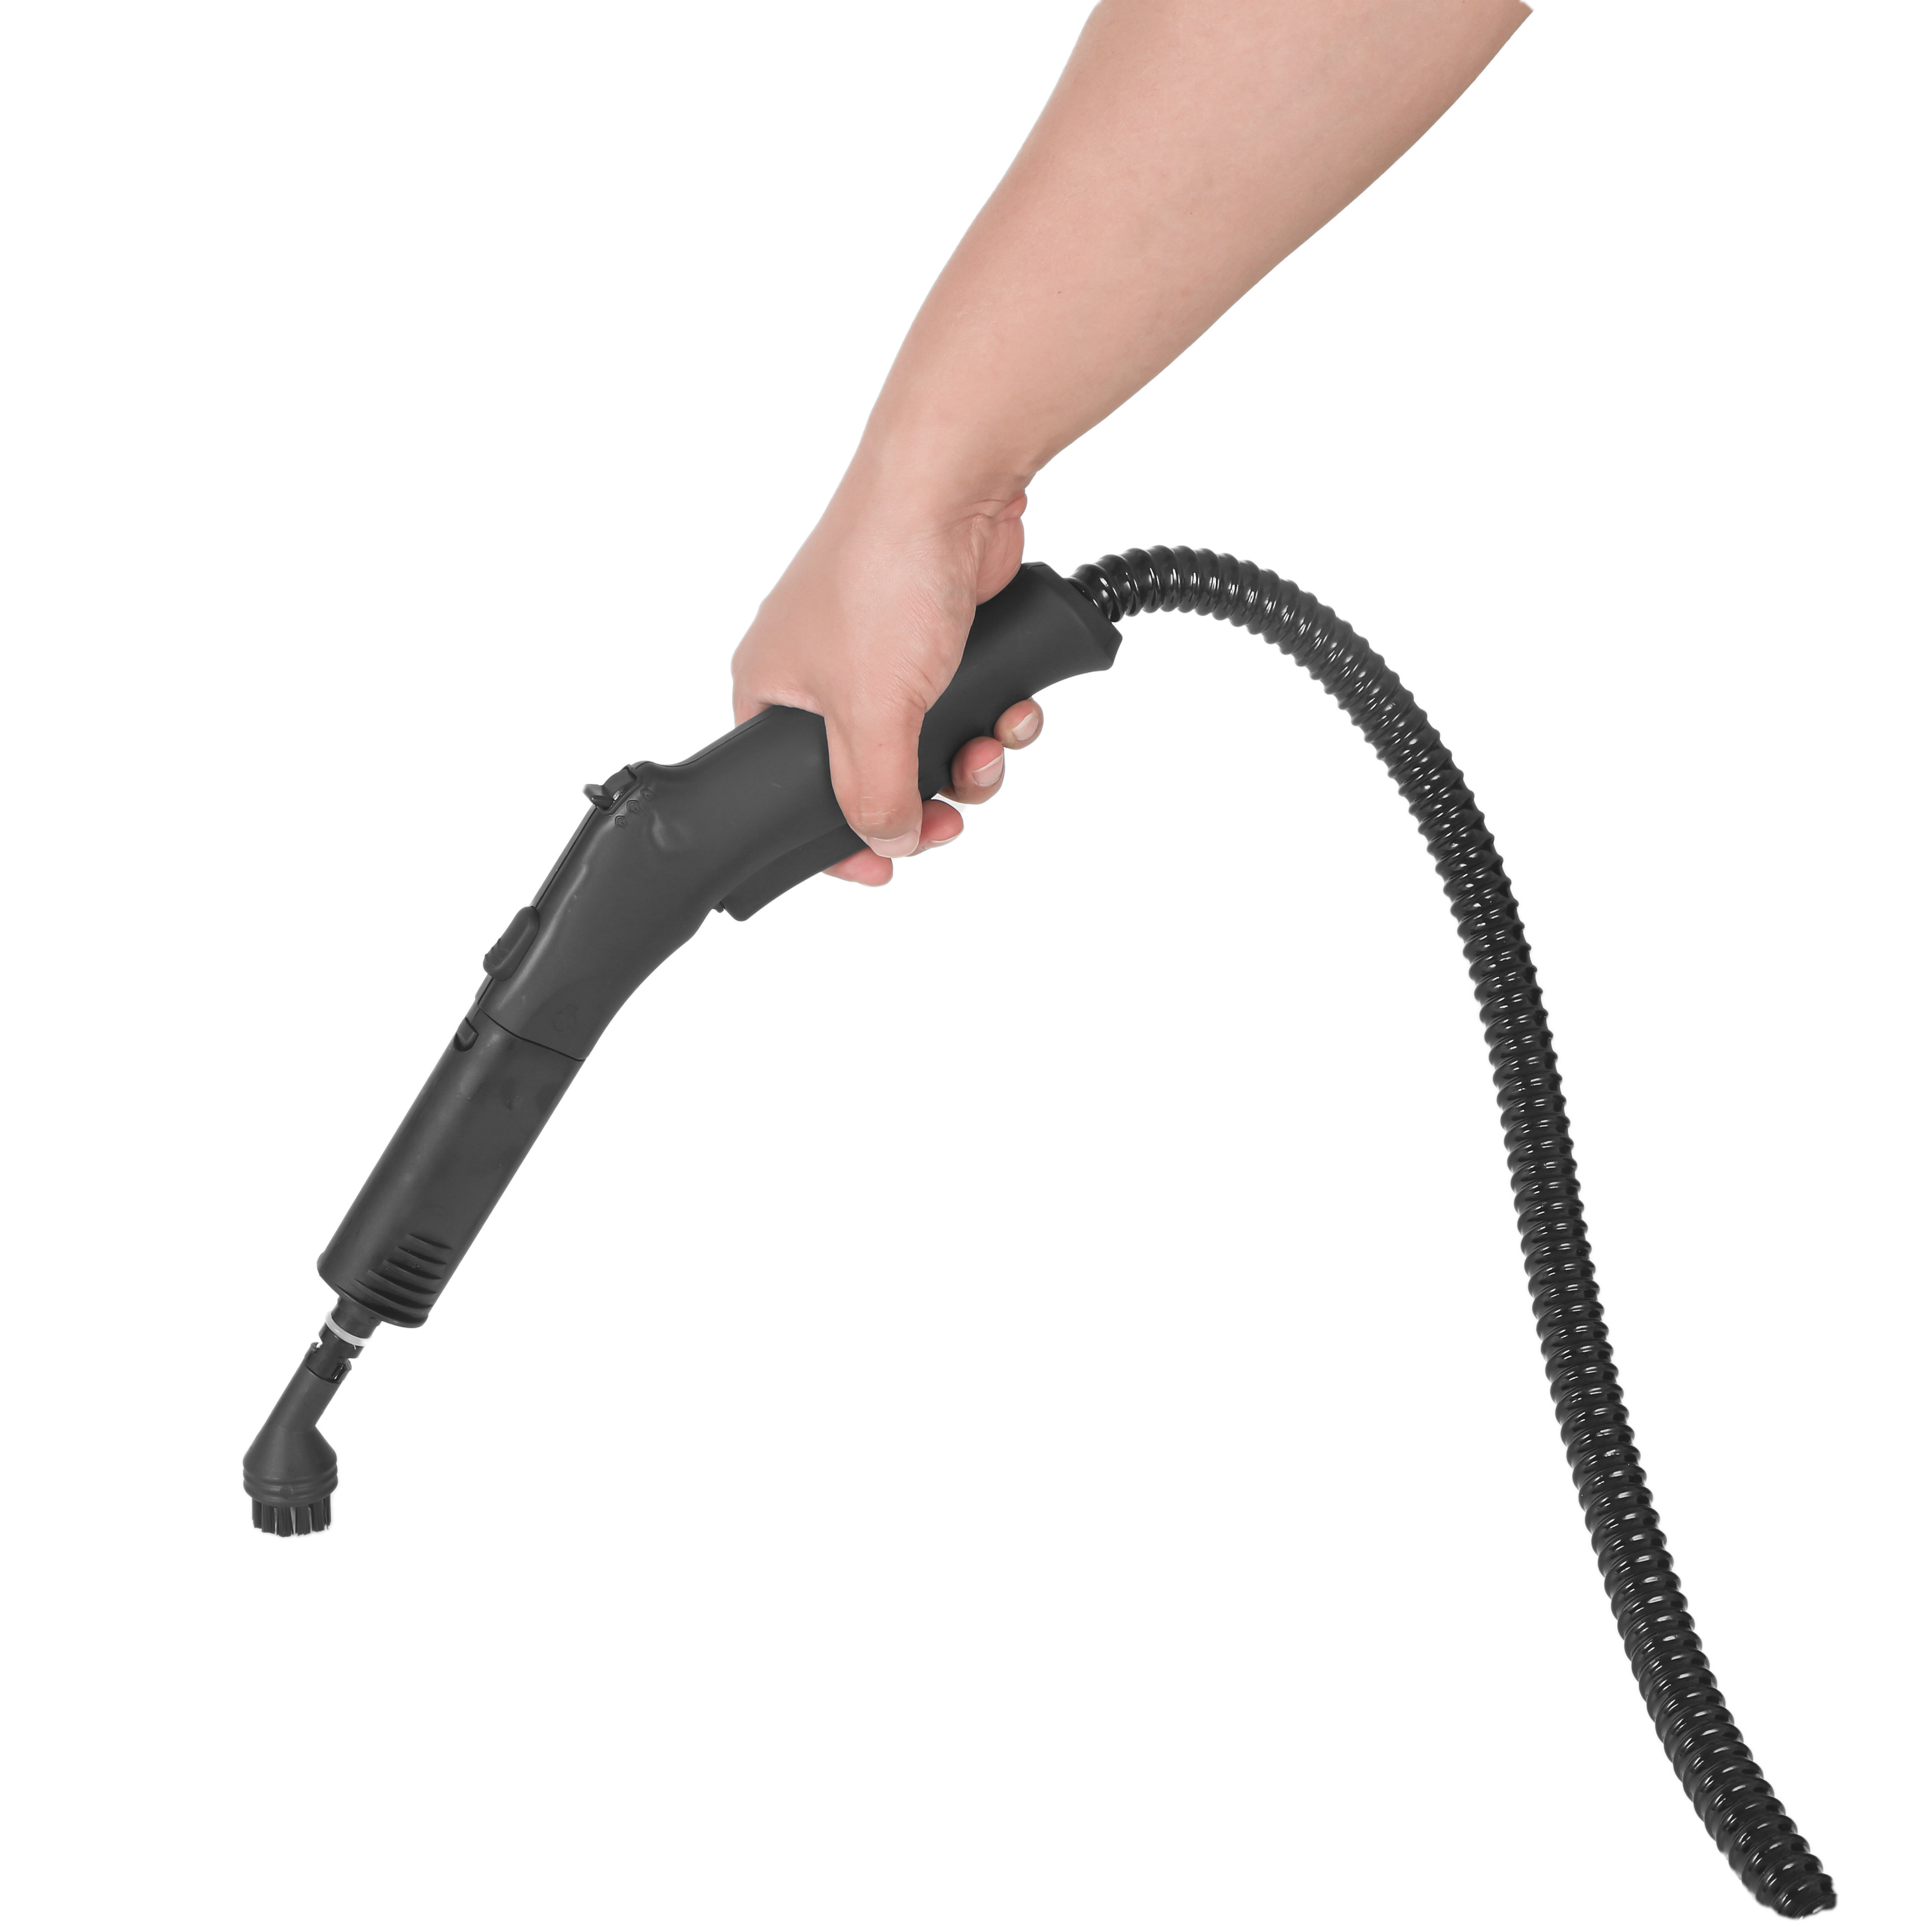 Multi-Purpose High Pressure Steamer for Car Carpet Floor Window Chemical  Free Steamer Electric Handheld Steam